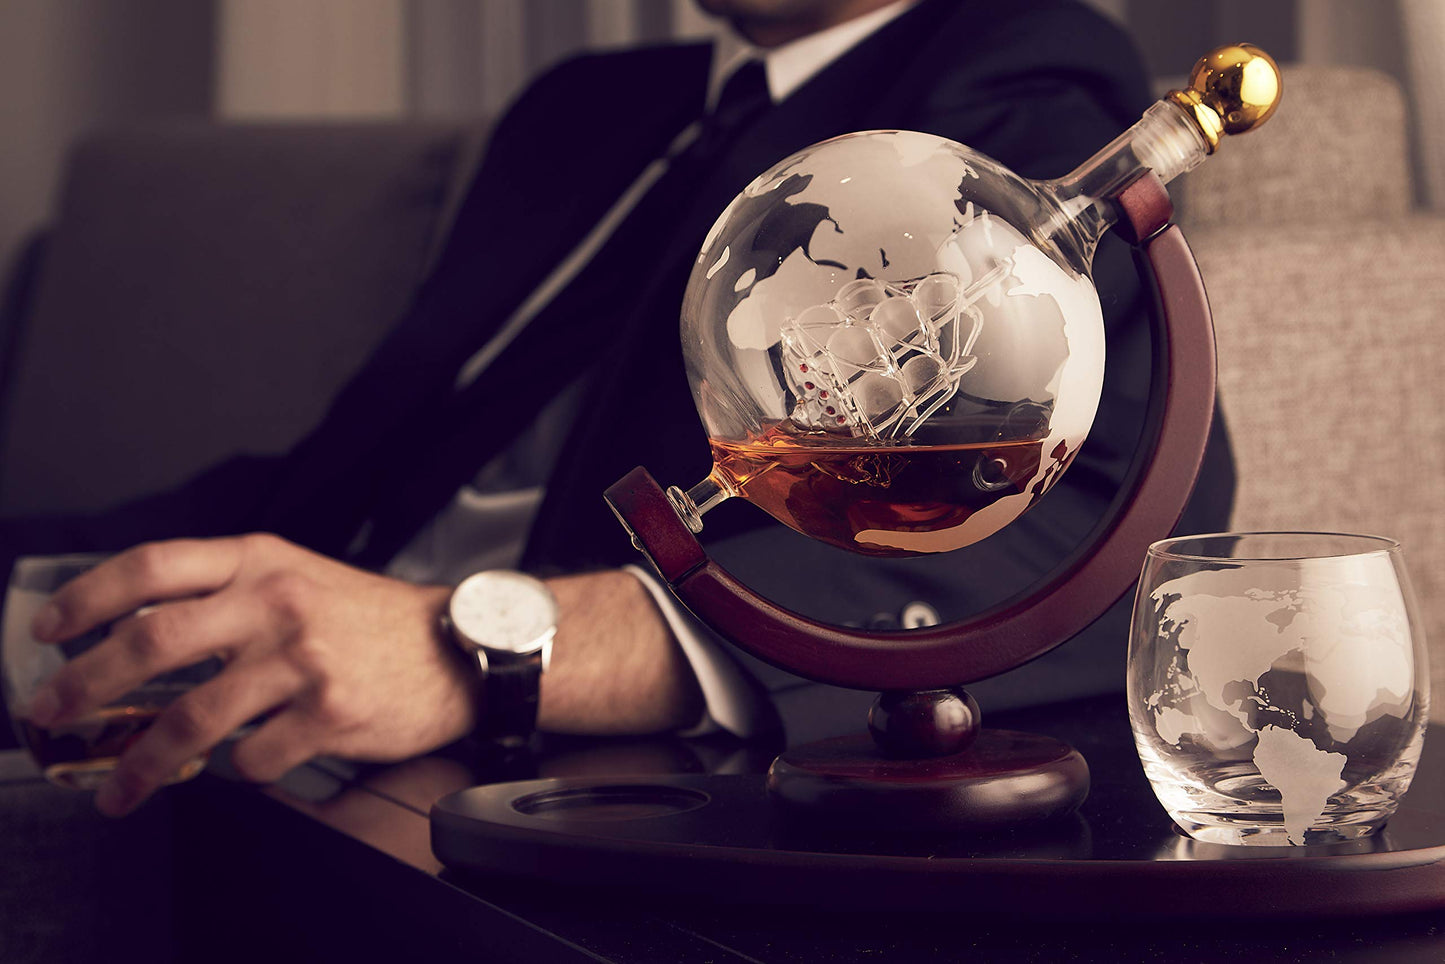 Godinger Whiskey Decanter Set with 2 Etched Globe Whisky Glasses, 850 mL